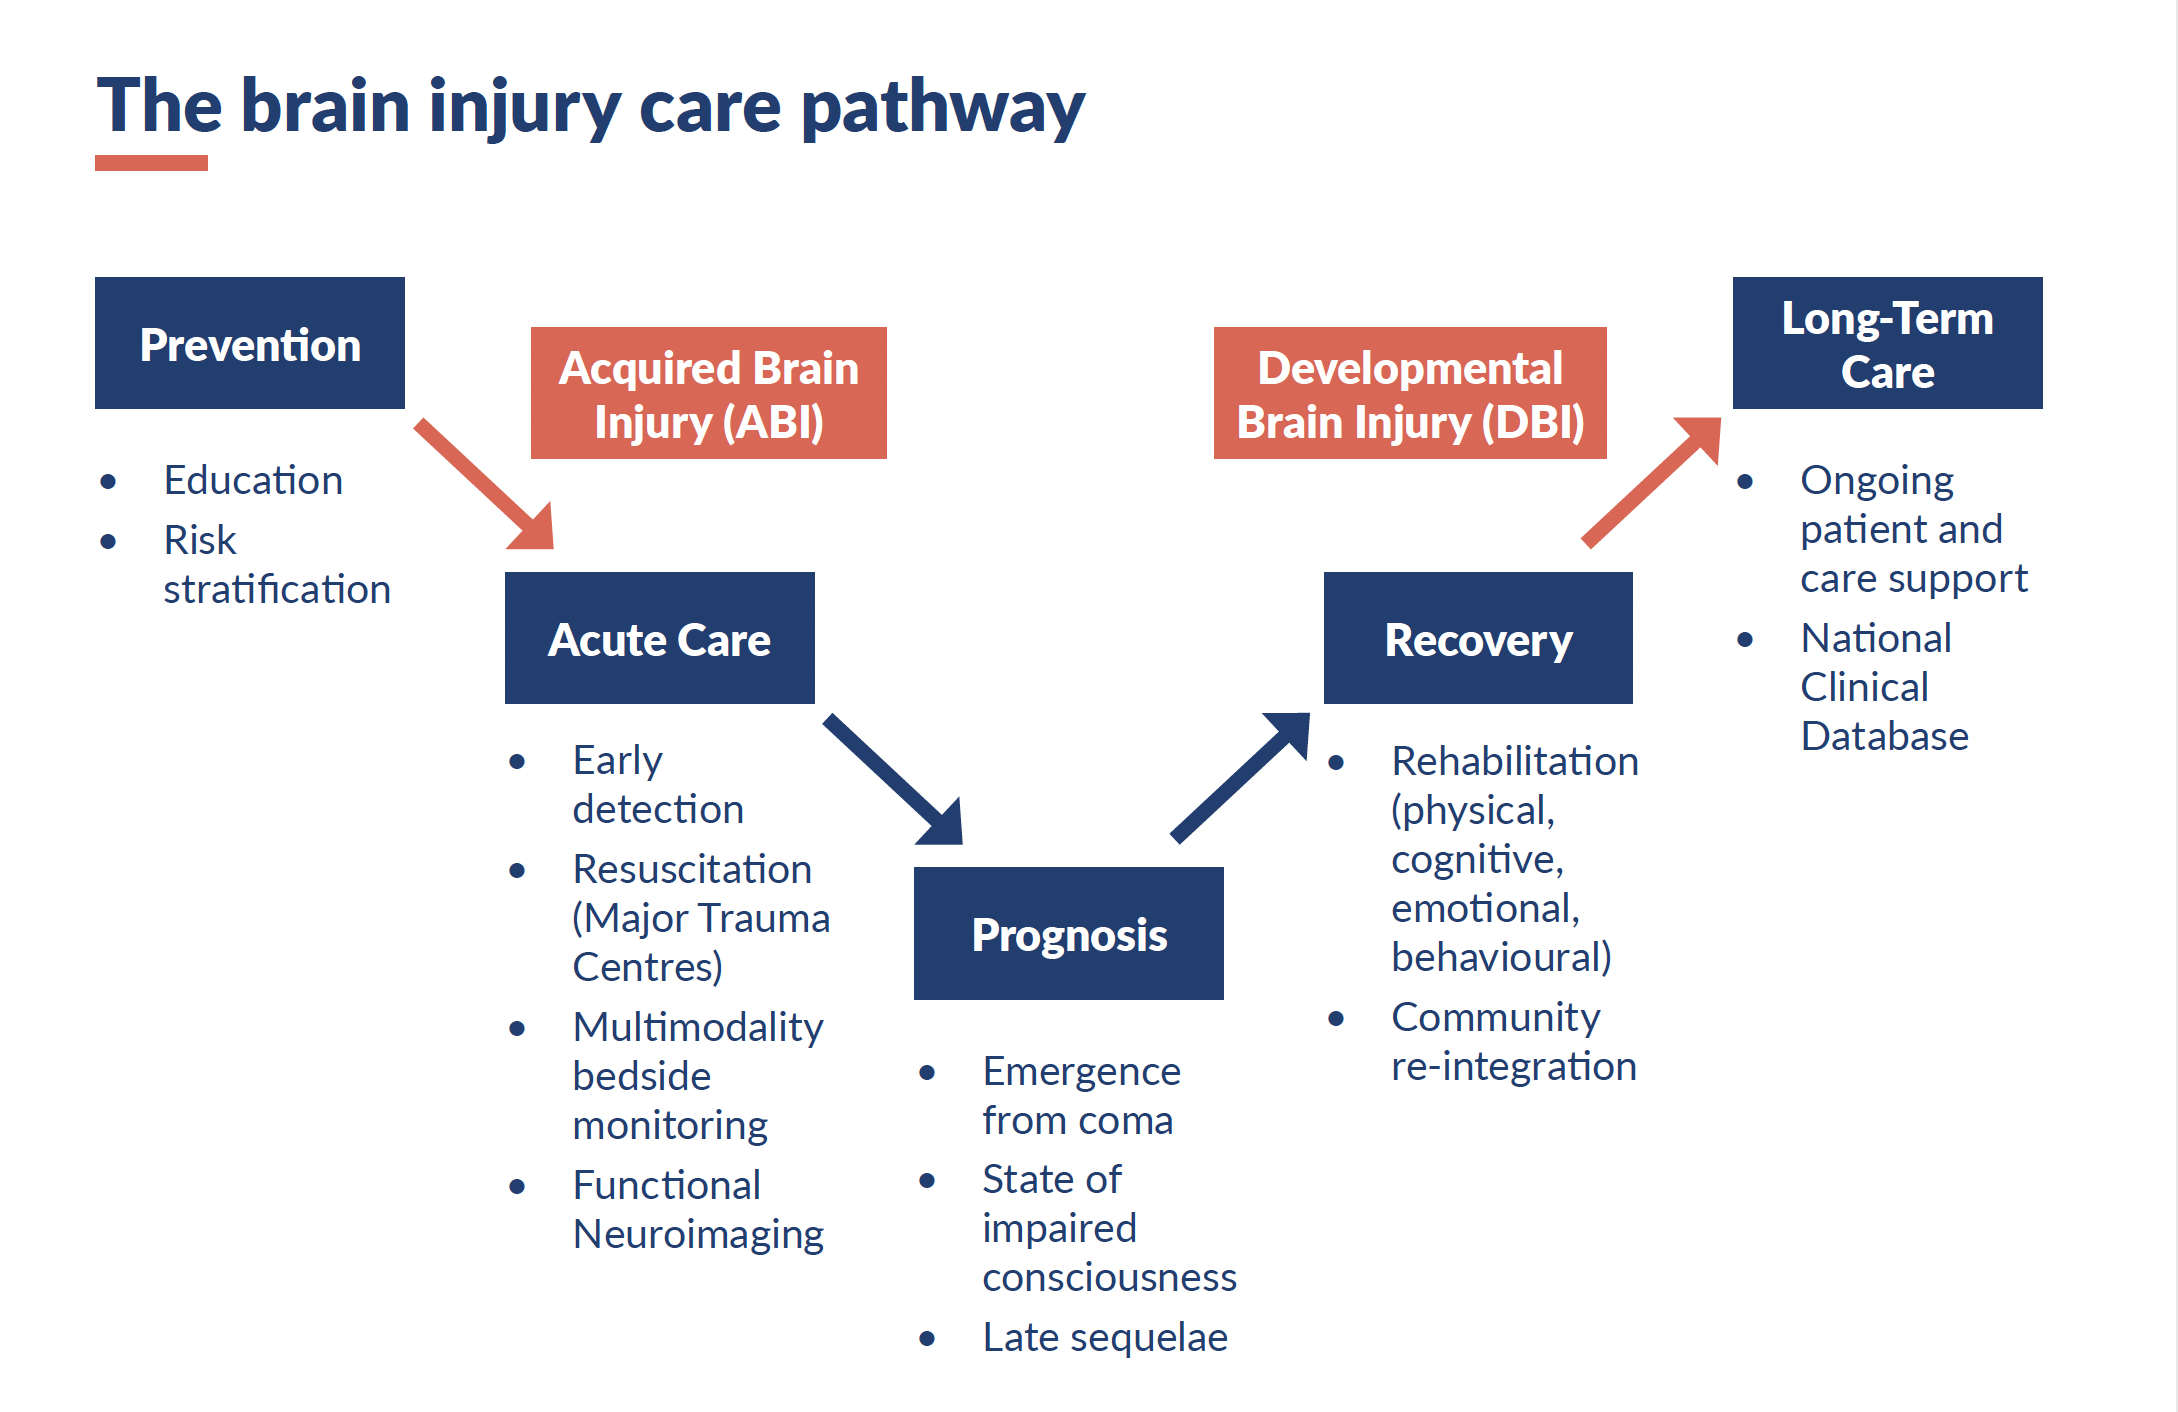 The brain injury patient pathway